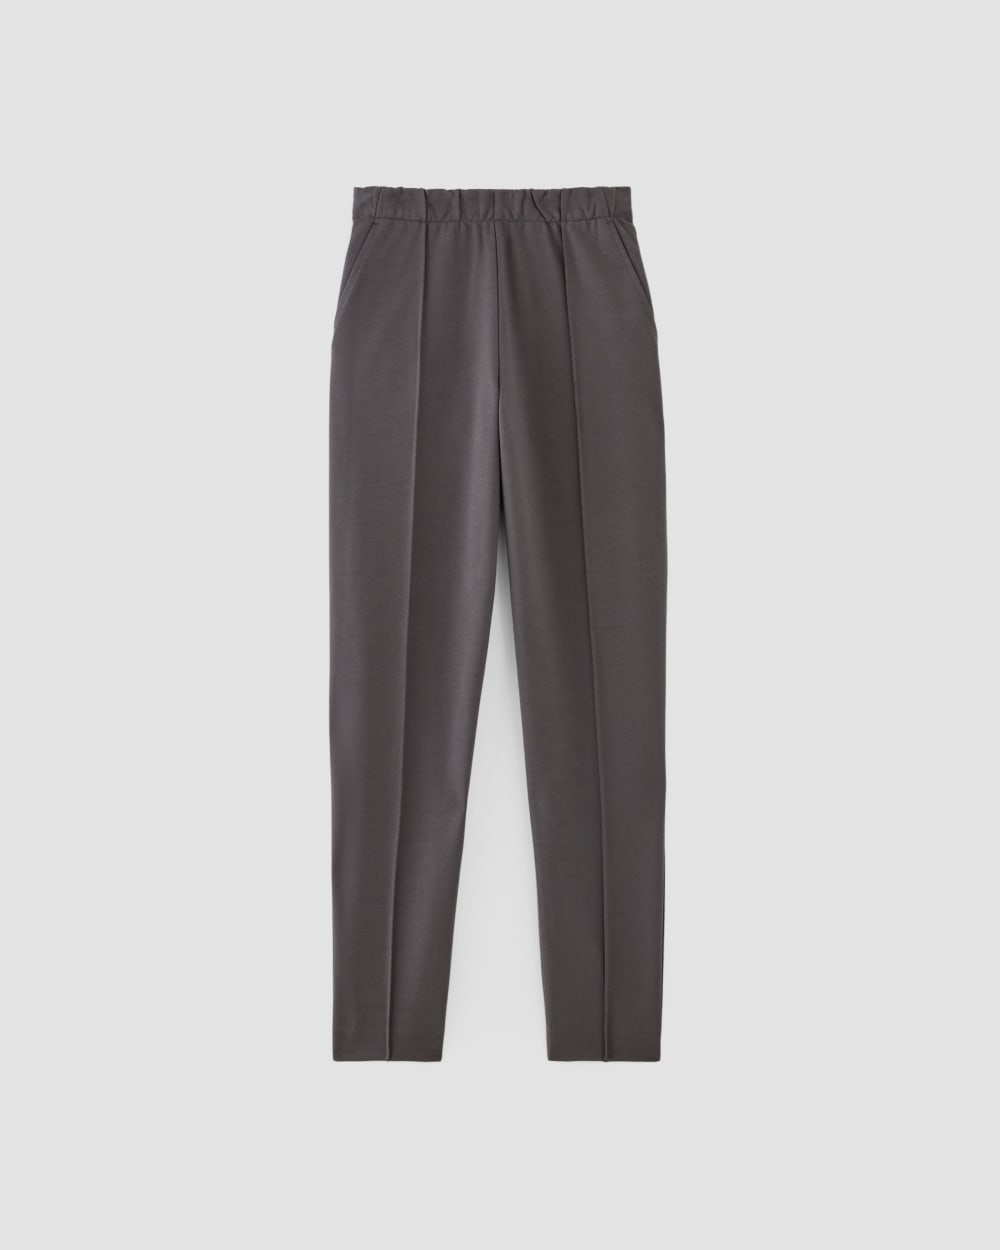 Straight Leg Trouser, Hollywood Fabric Style 25856 – Dream Pants